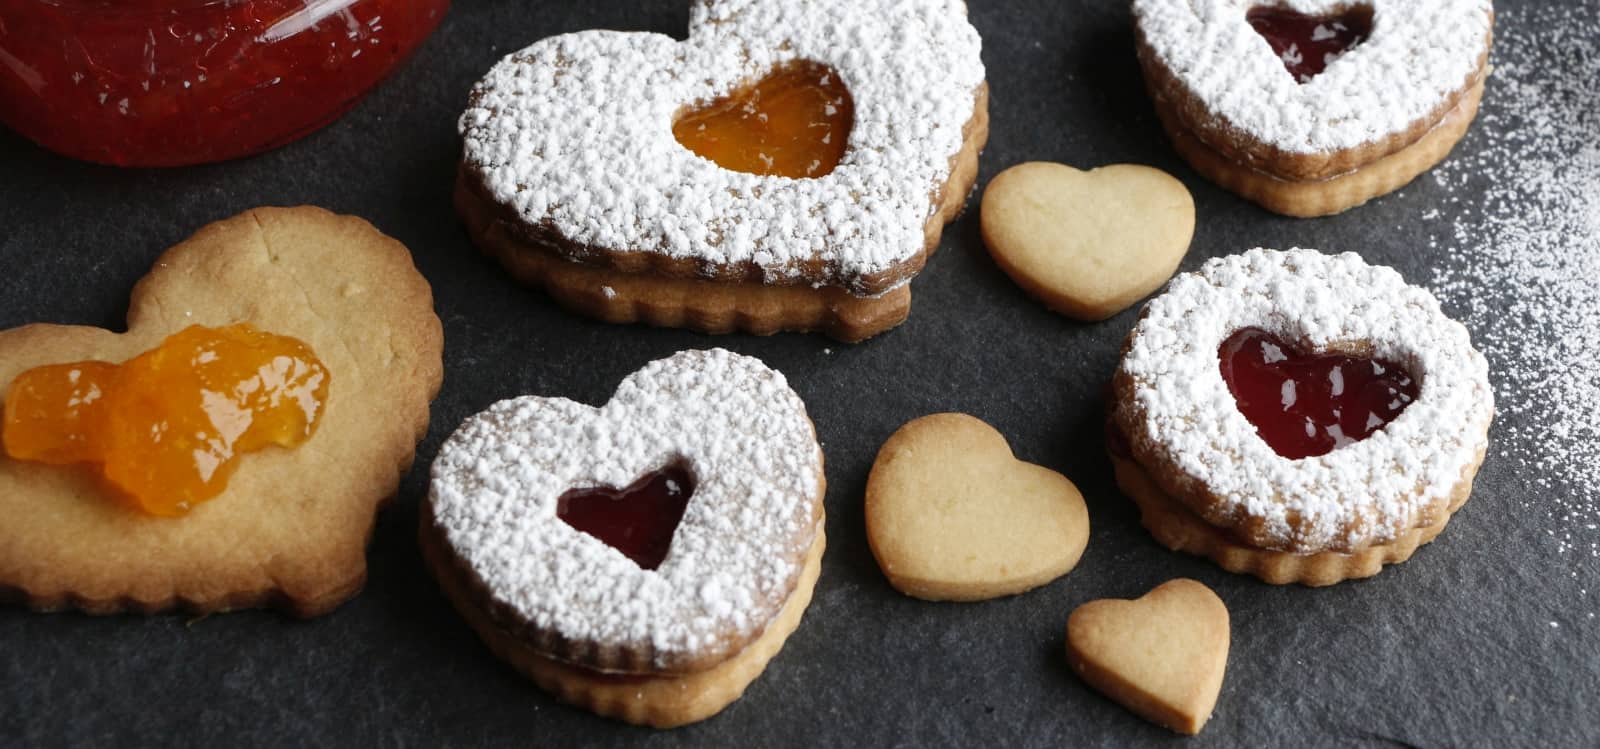 valentine heart cookies